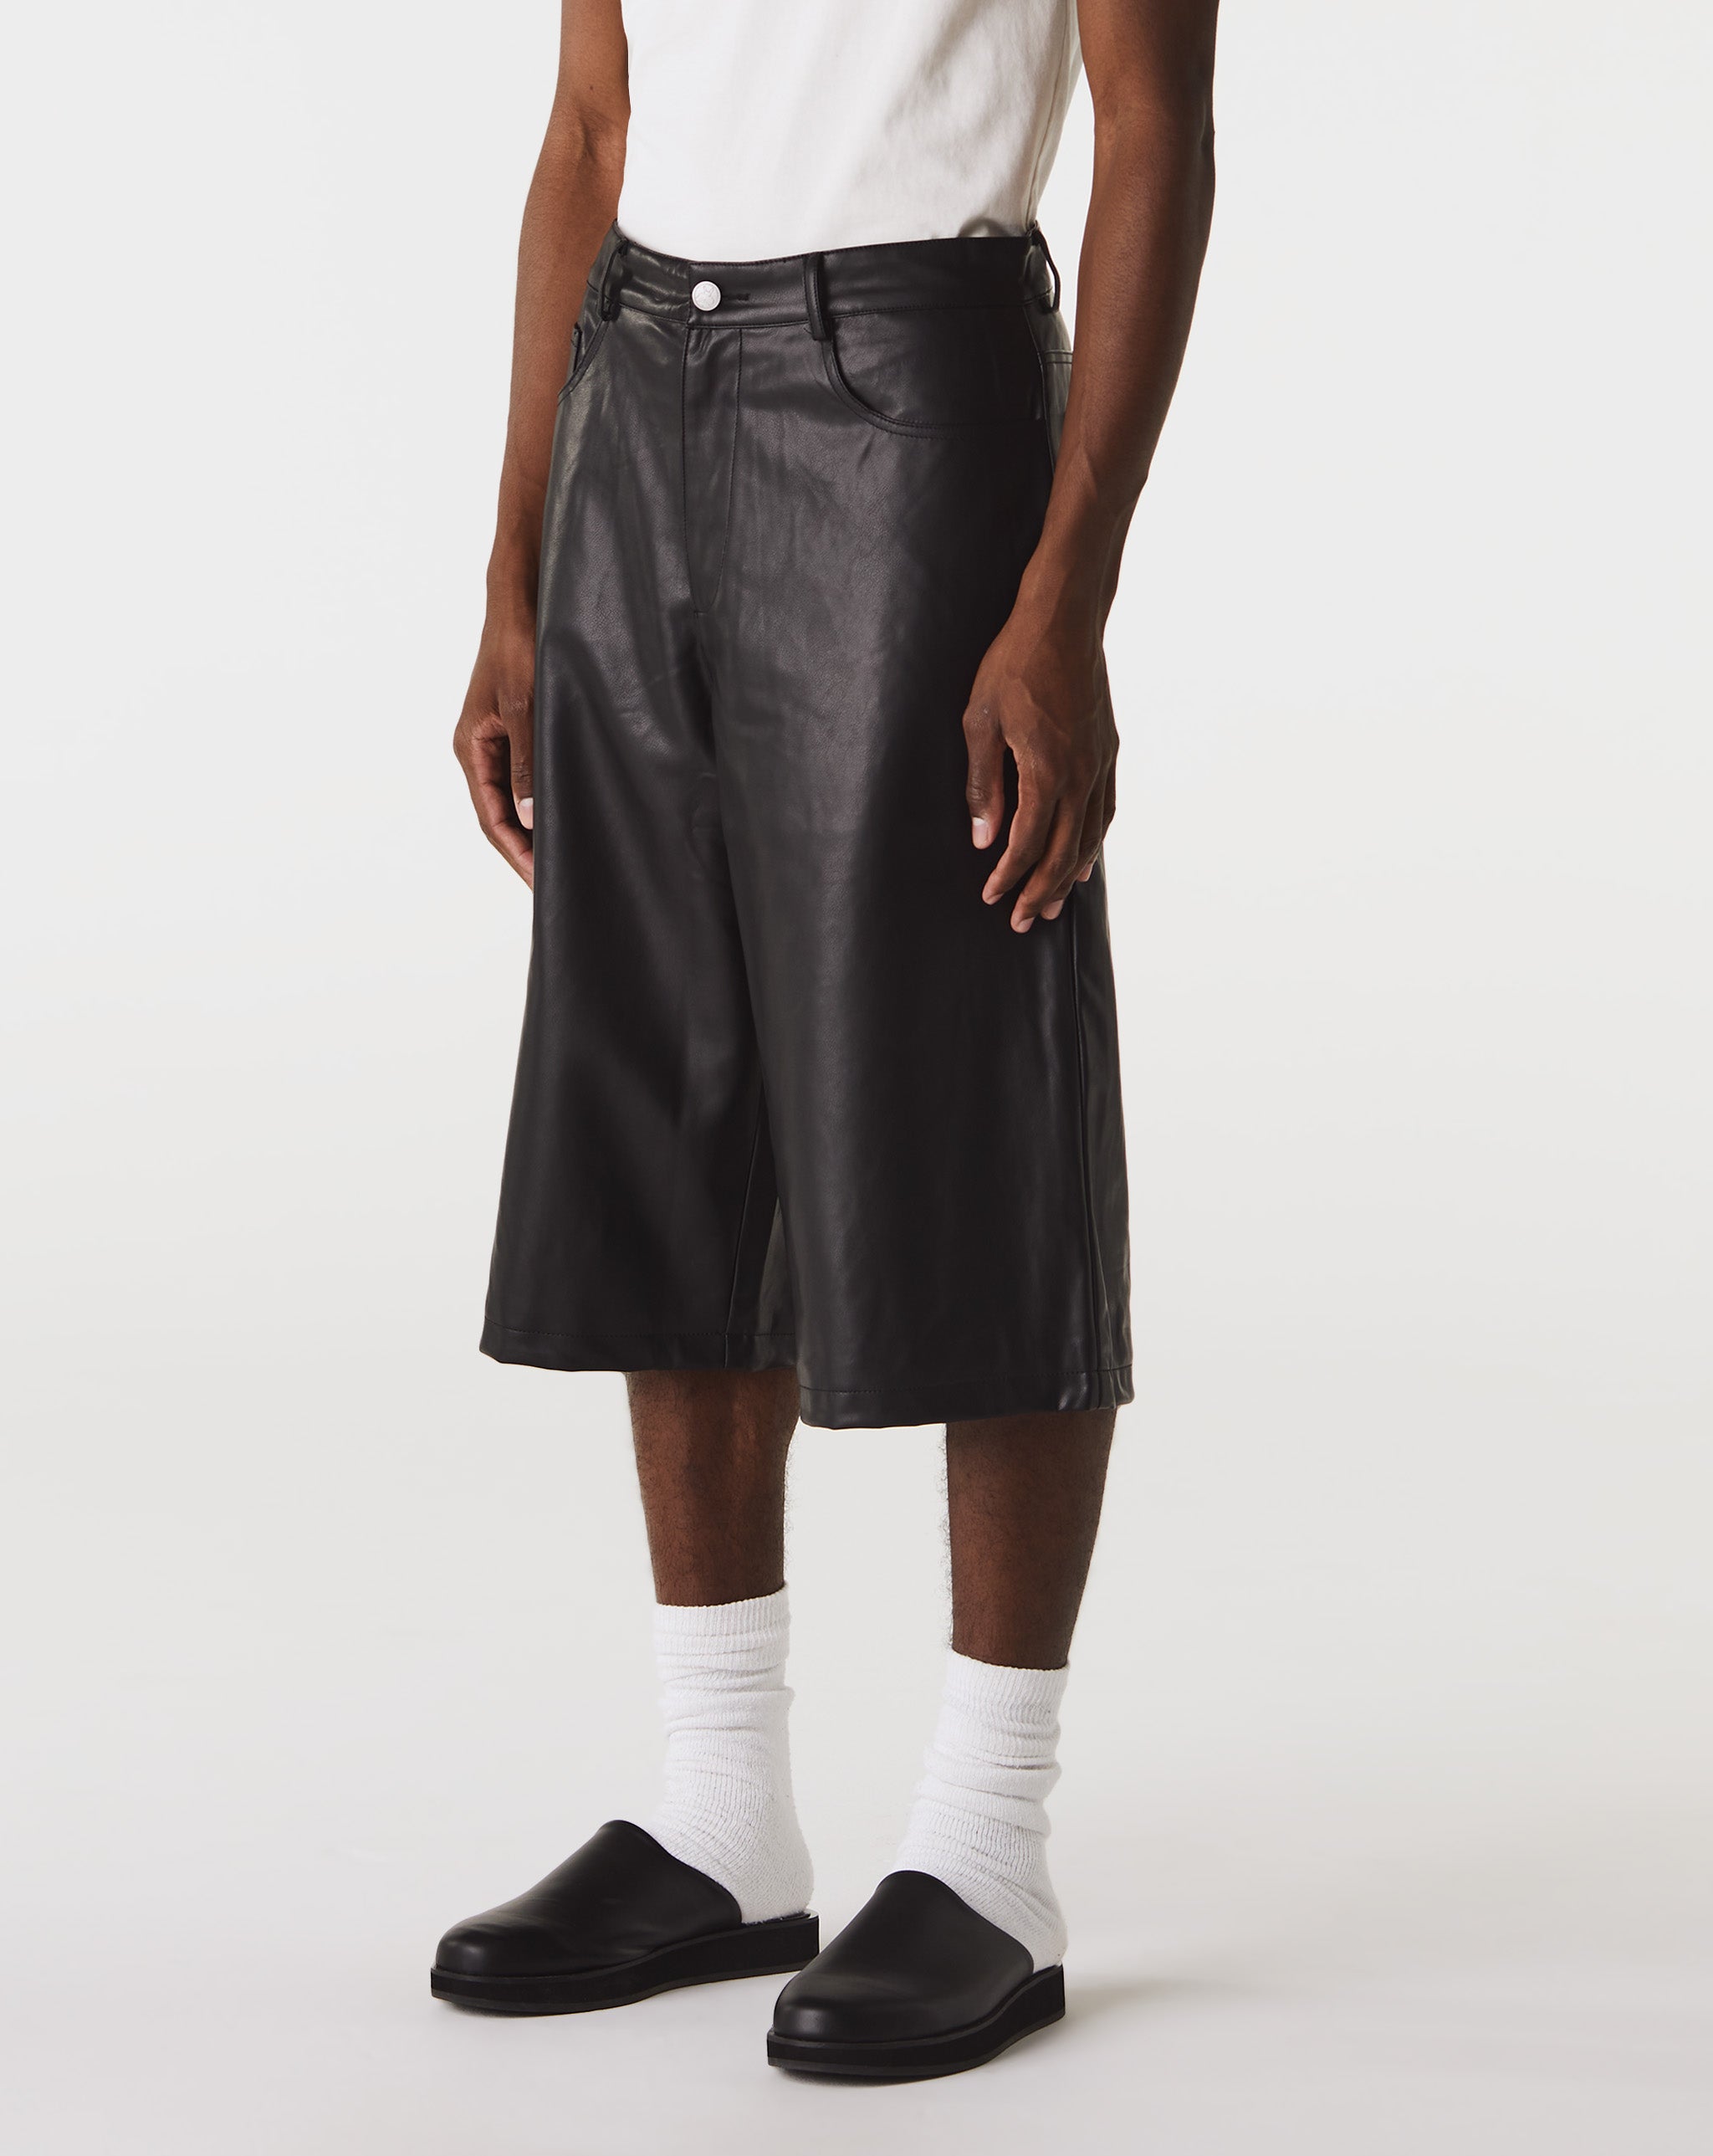 Basketcase Gallery Breacher Leather Shorts  - XHIBITION